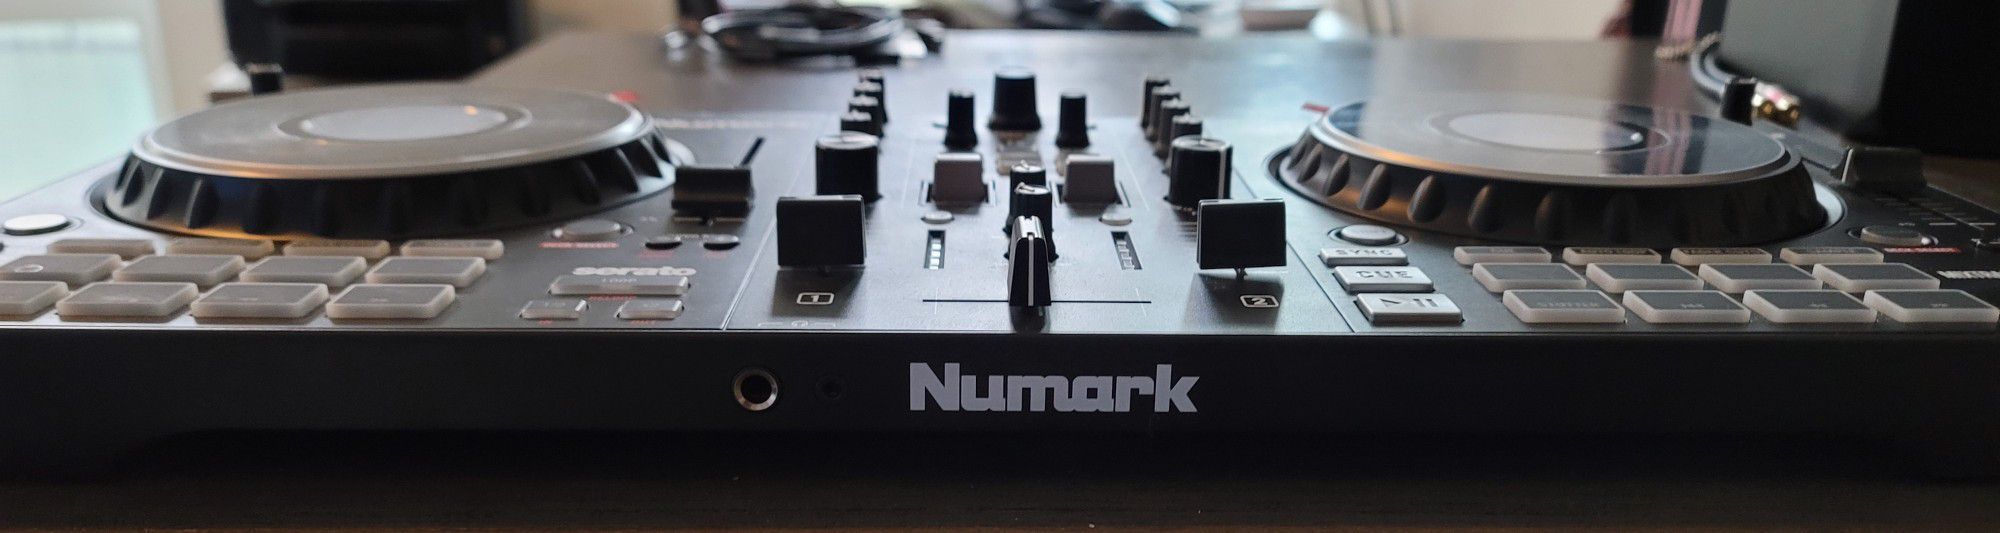 Numark Serato Controller + Pioneer DJ Headphones 